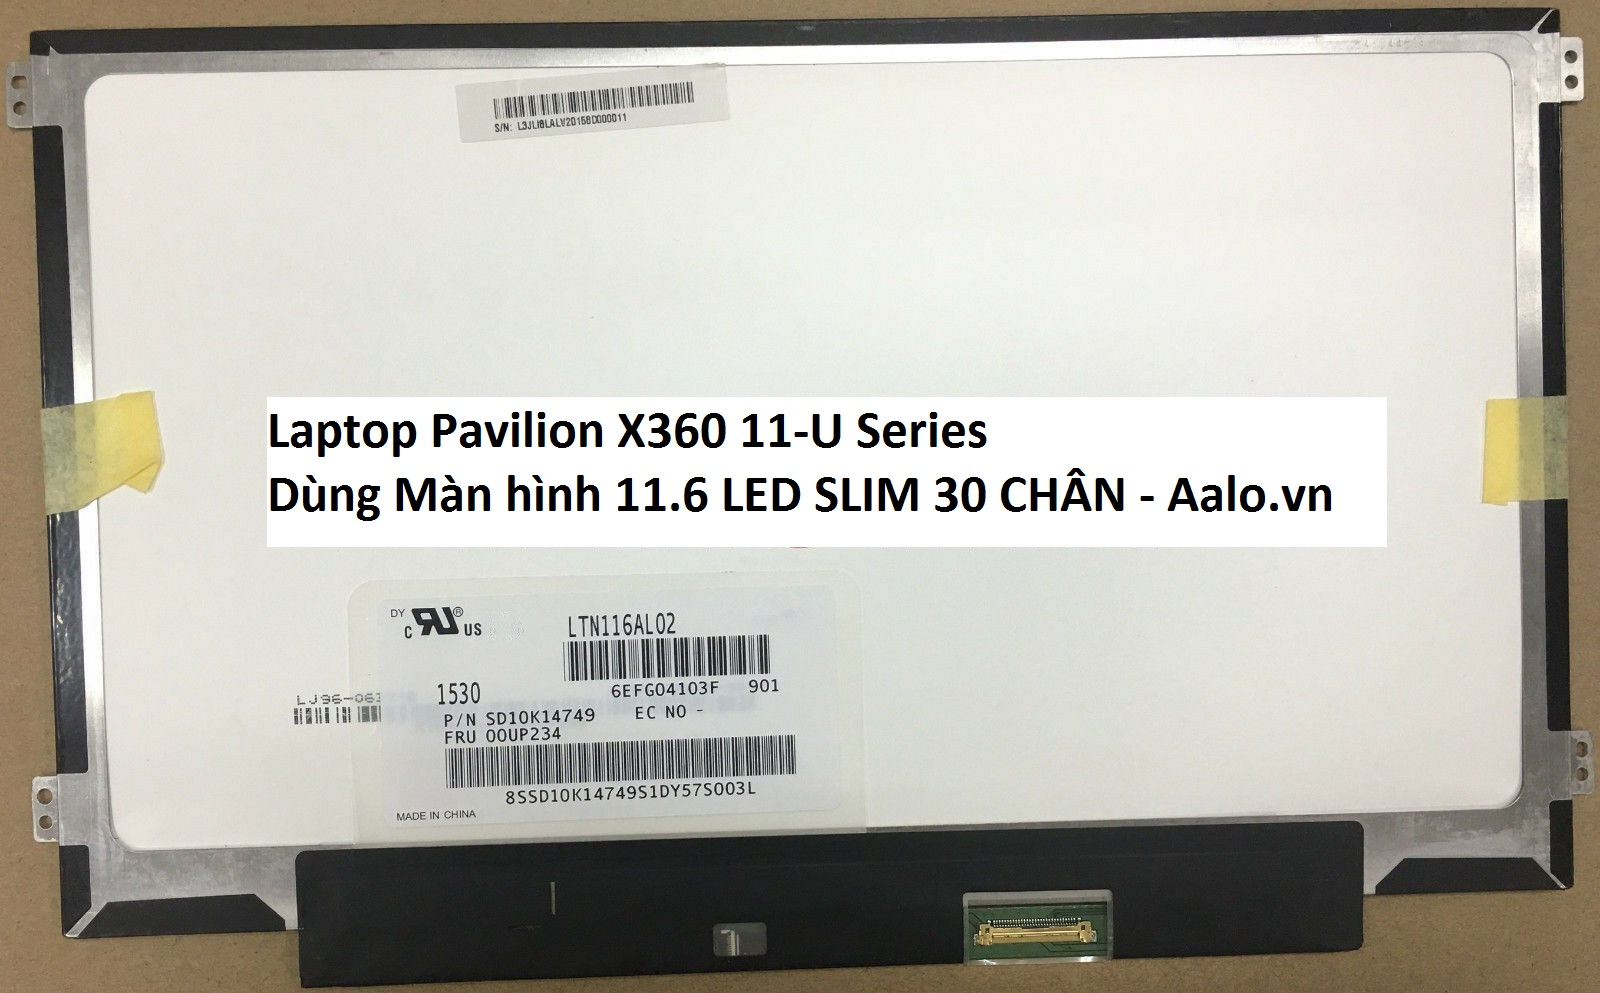 Màn hình Laptop Pavilion X360 11-U Series - Aalo.vn